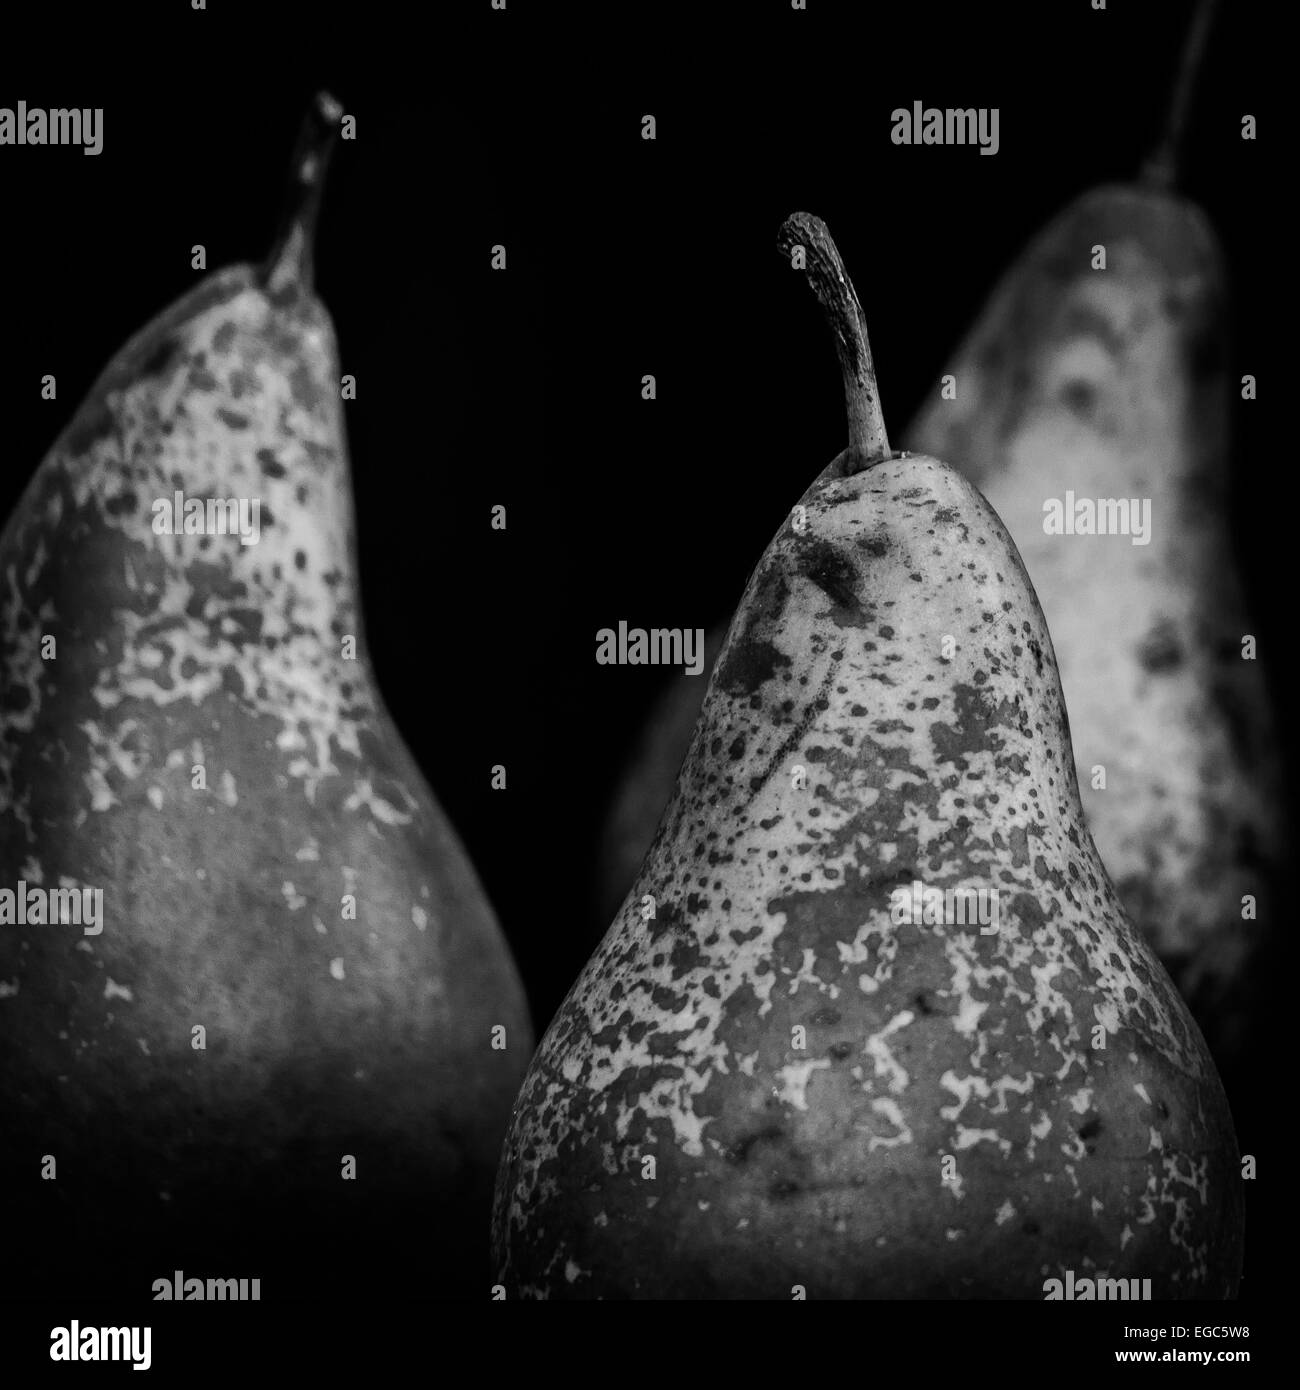 3 pears Stock Photo